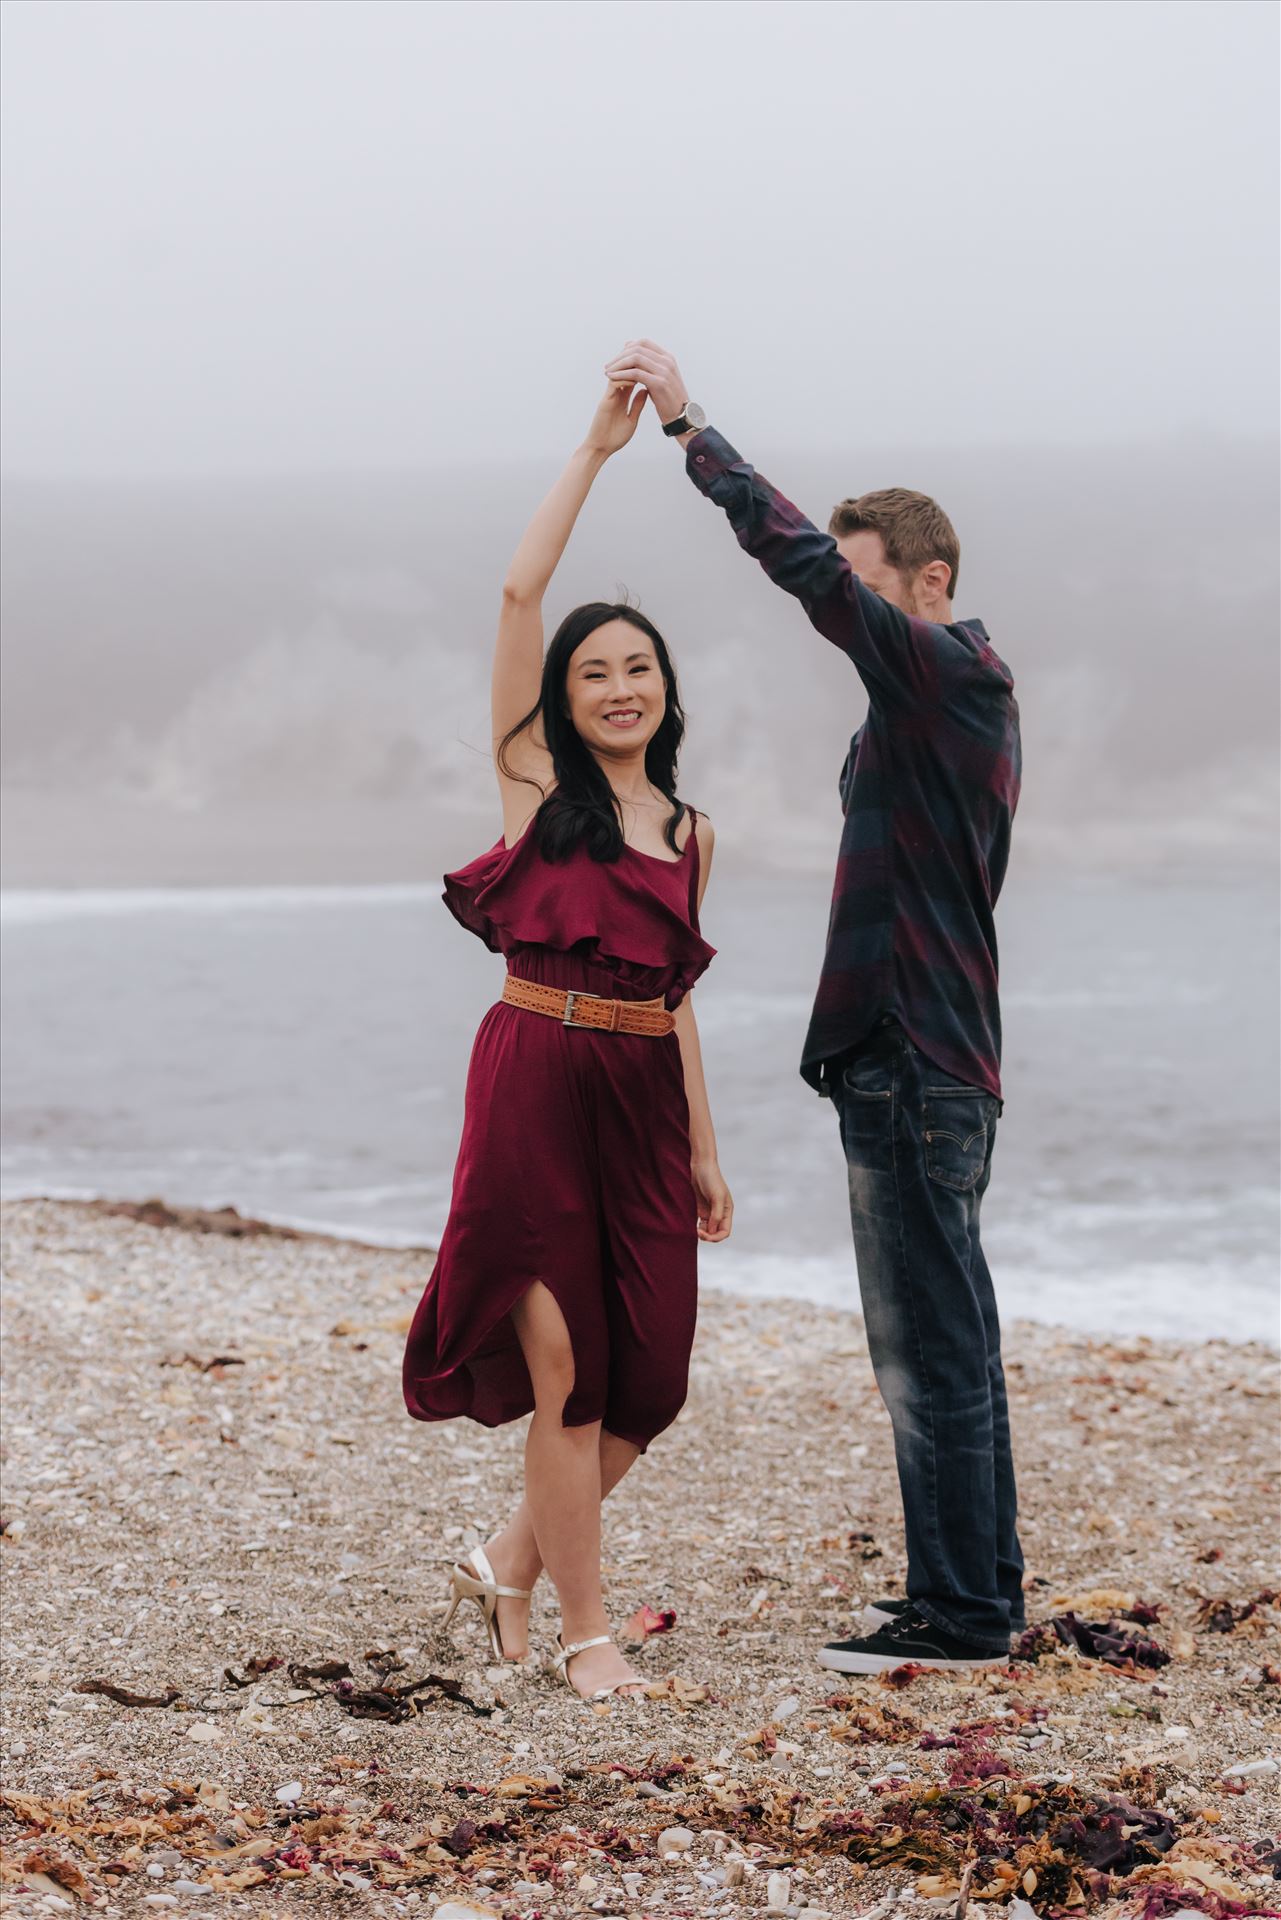 Carmen and Josh 18 - Montana de Oro Spooners Cove Engagement Photography Los Osos California.  Dancing in the sea by Sarah Williams